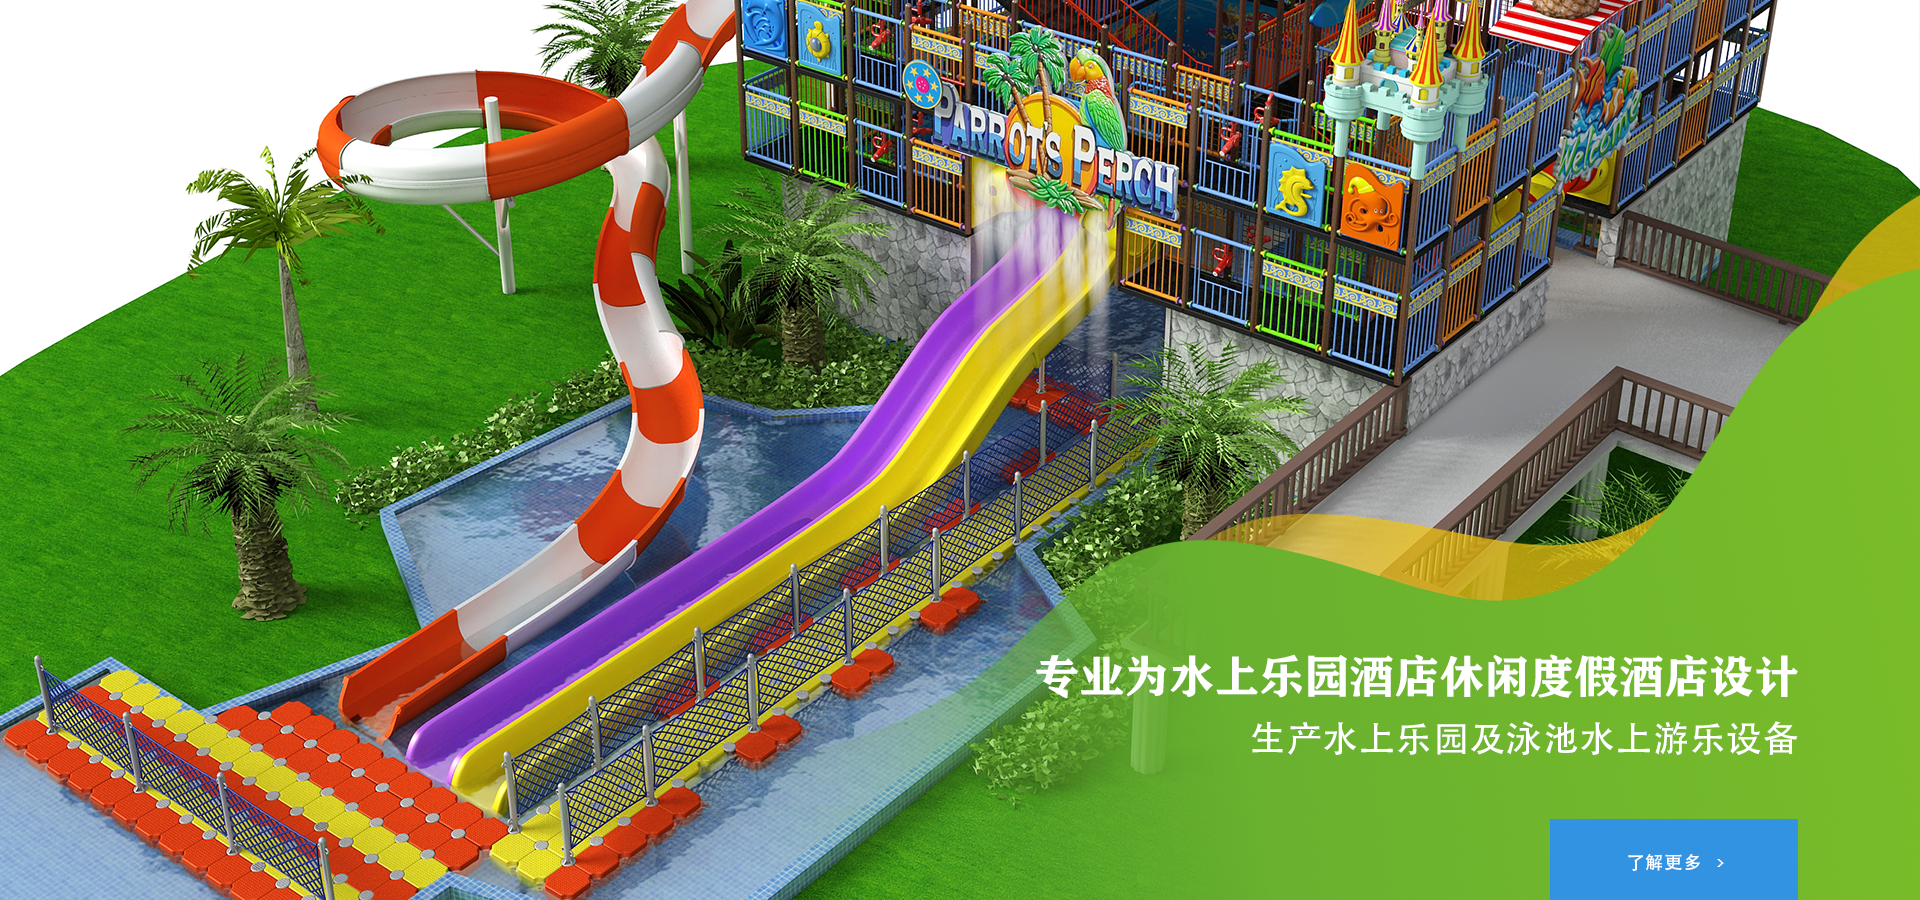 Playground Slide, Kindergarten Equipment, Outdoor Fitness Equipment, Water Park Equipment, Indoor Playground Equipment